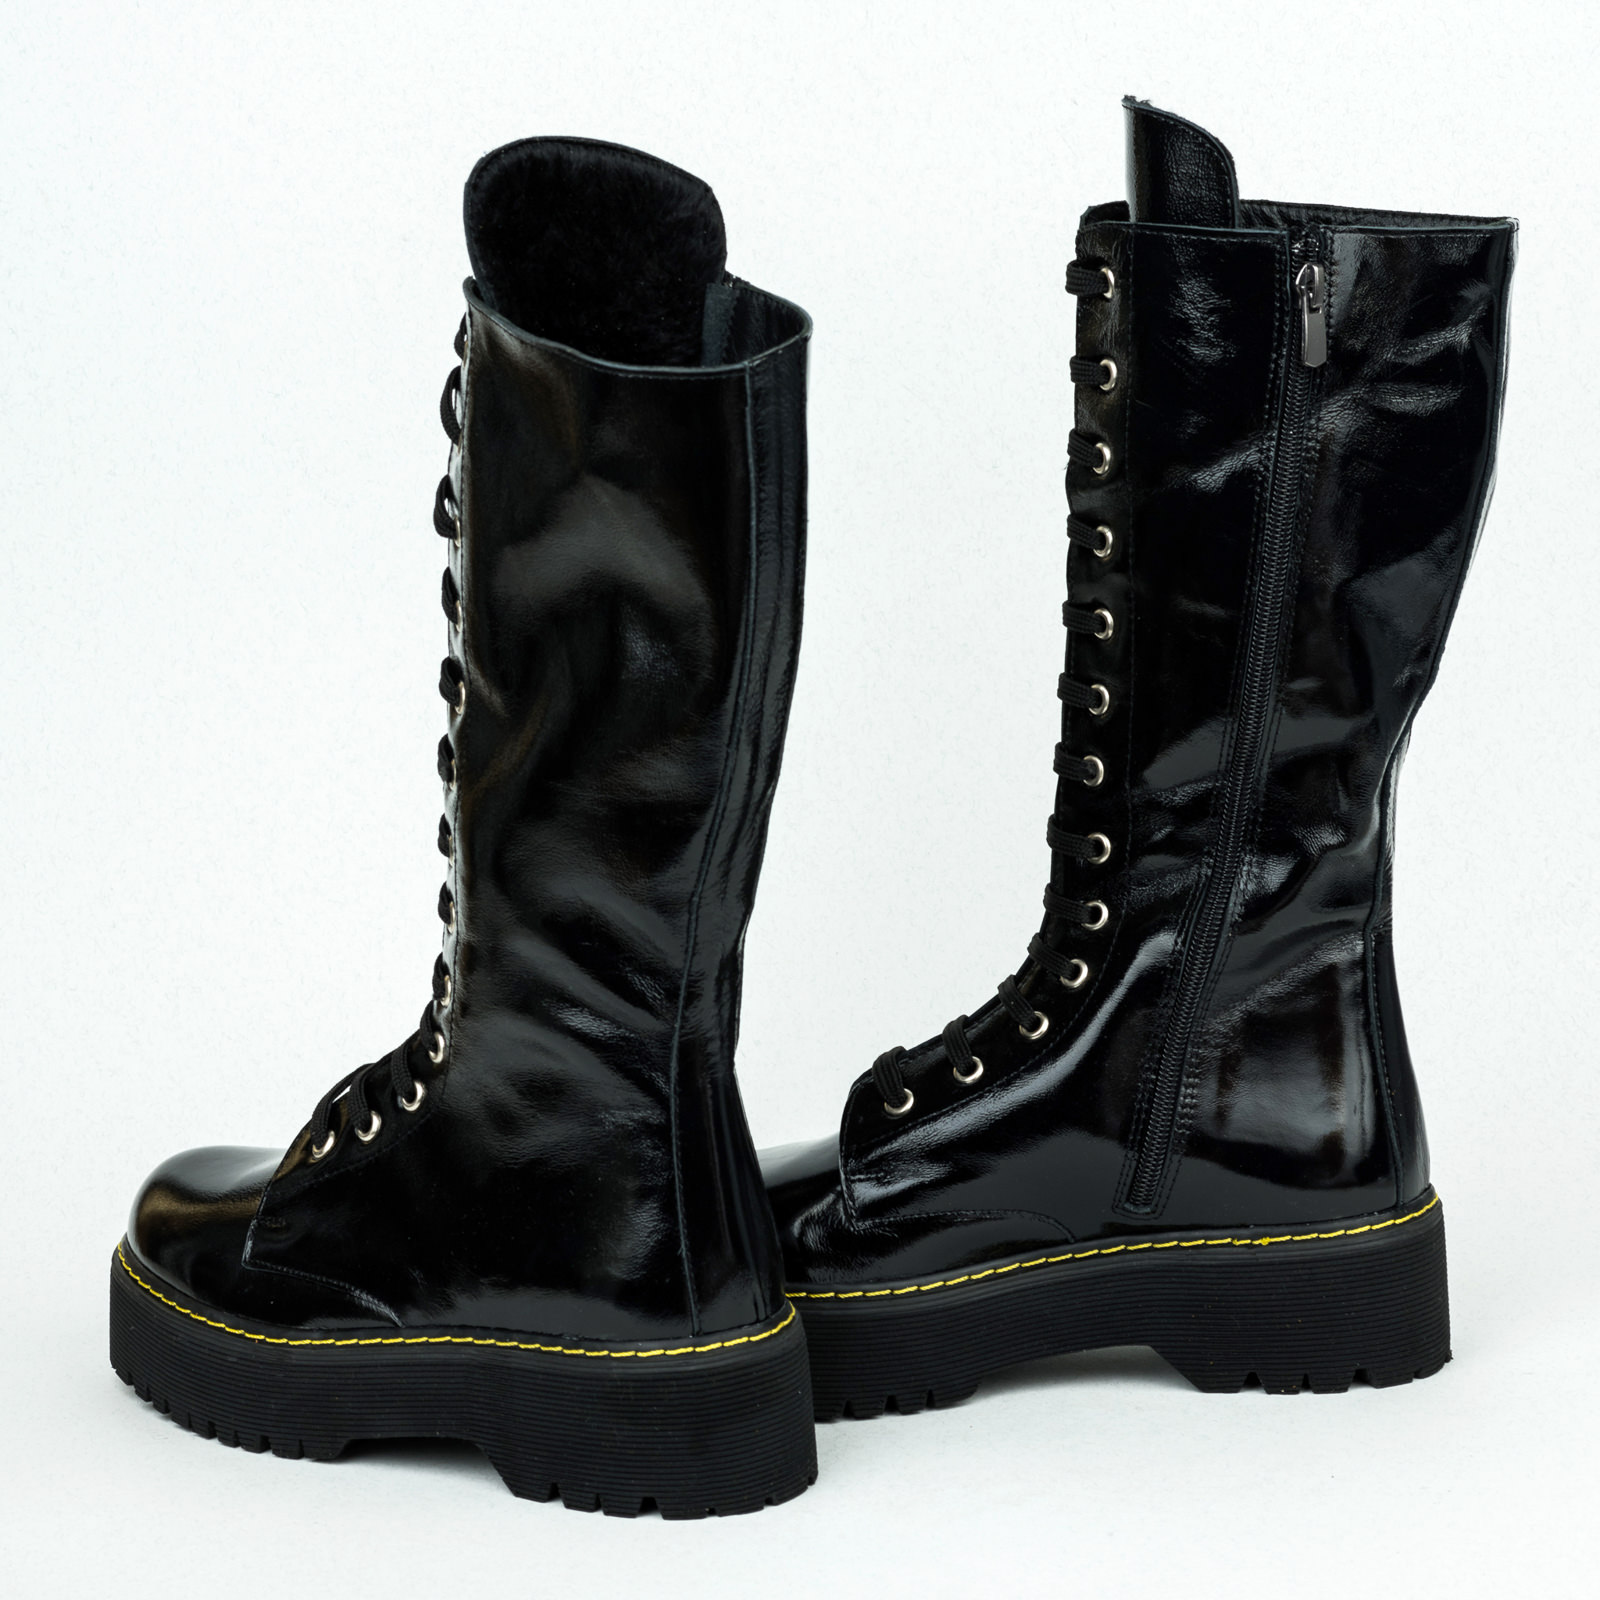 Leather WATERPROOF boots B151 - BLACK